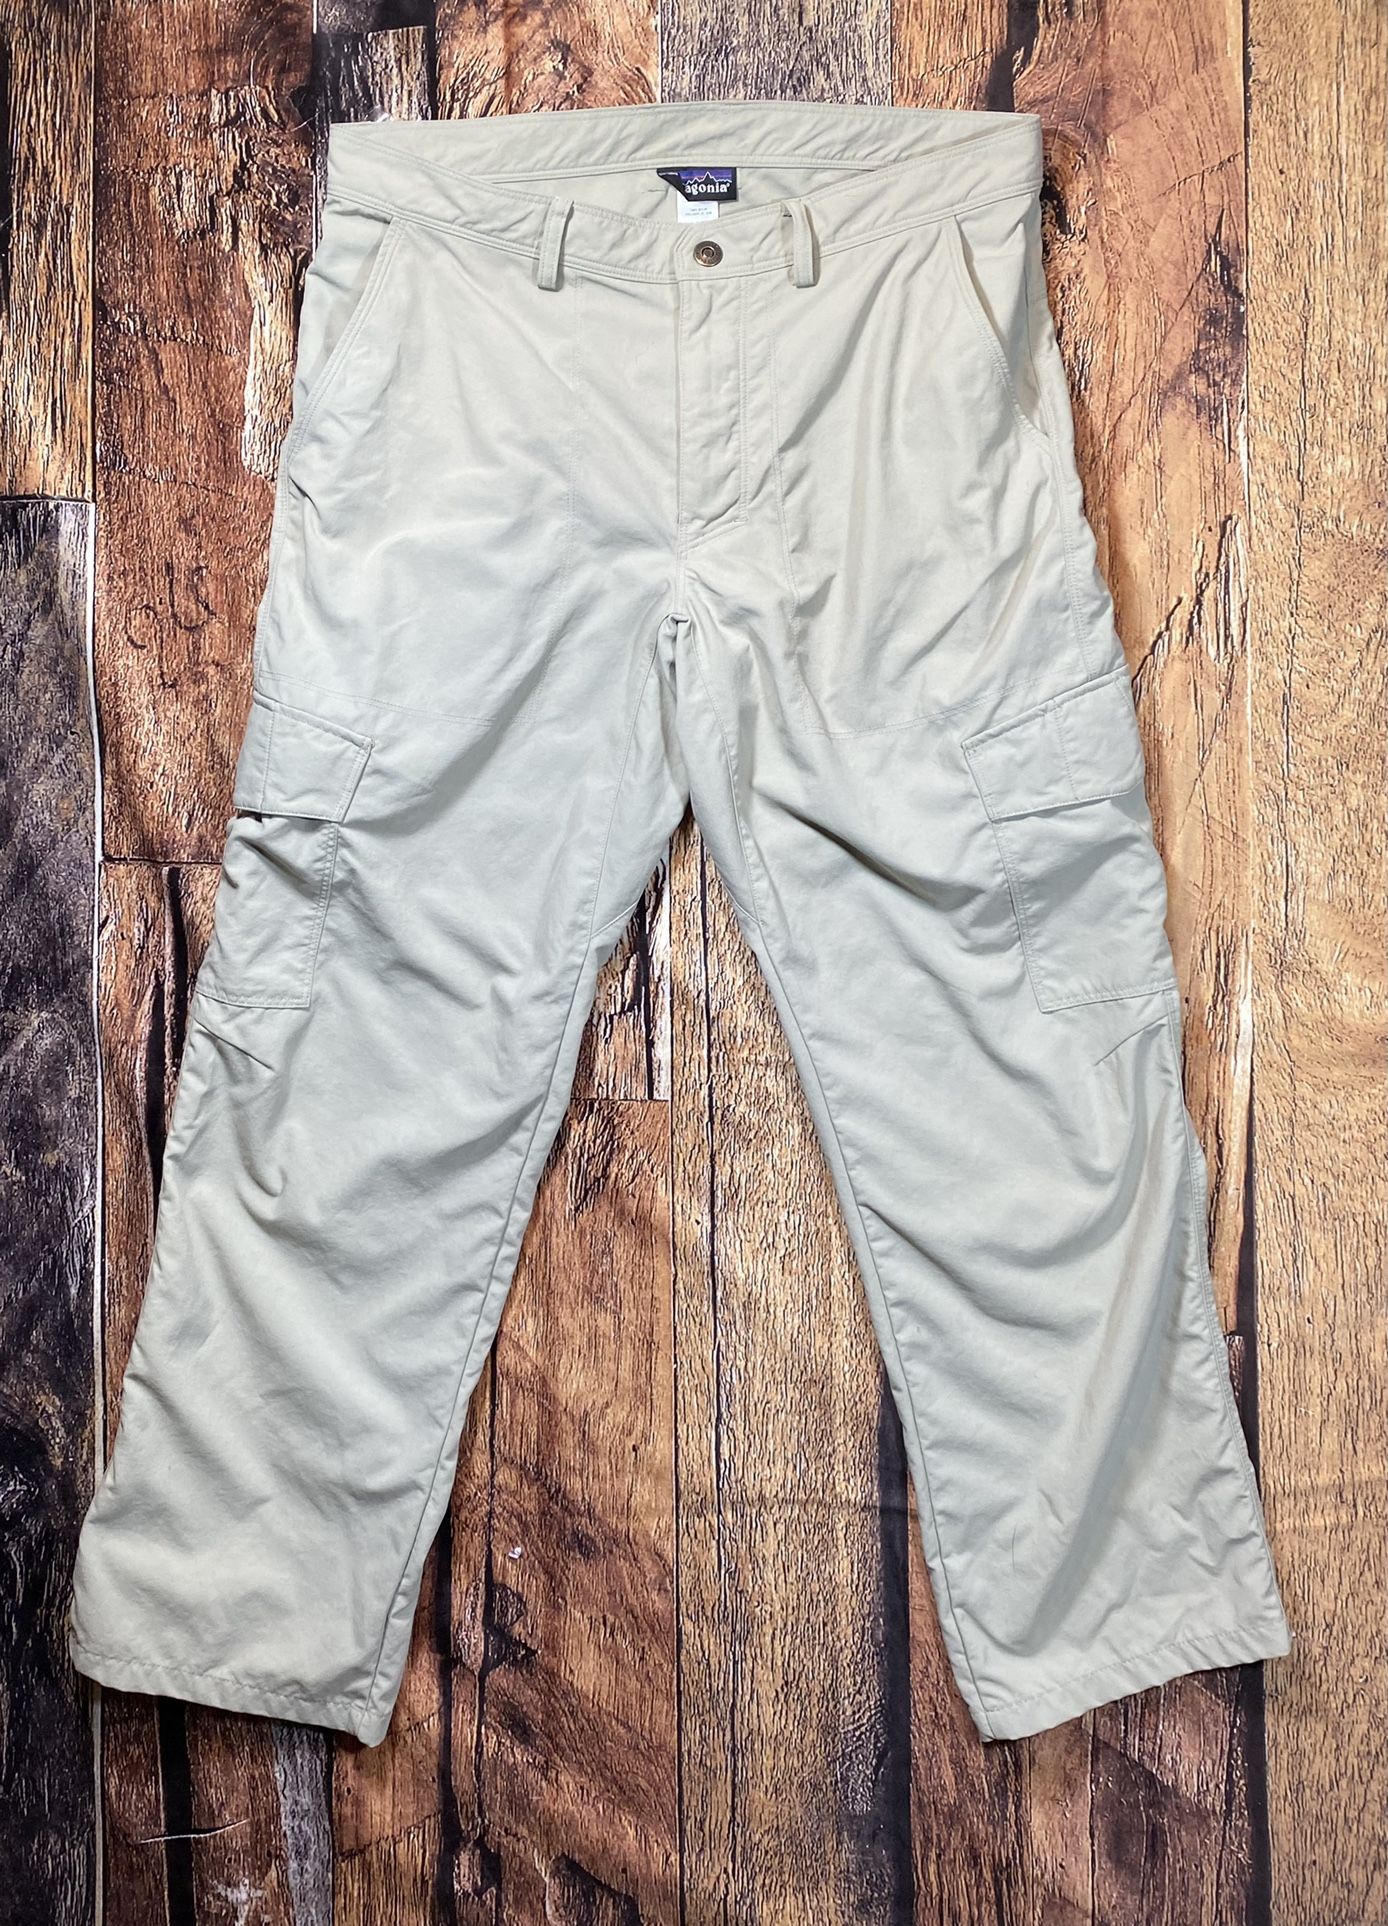 Men’s Patagonia cargo Khaki pants size 34